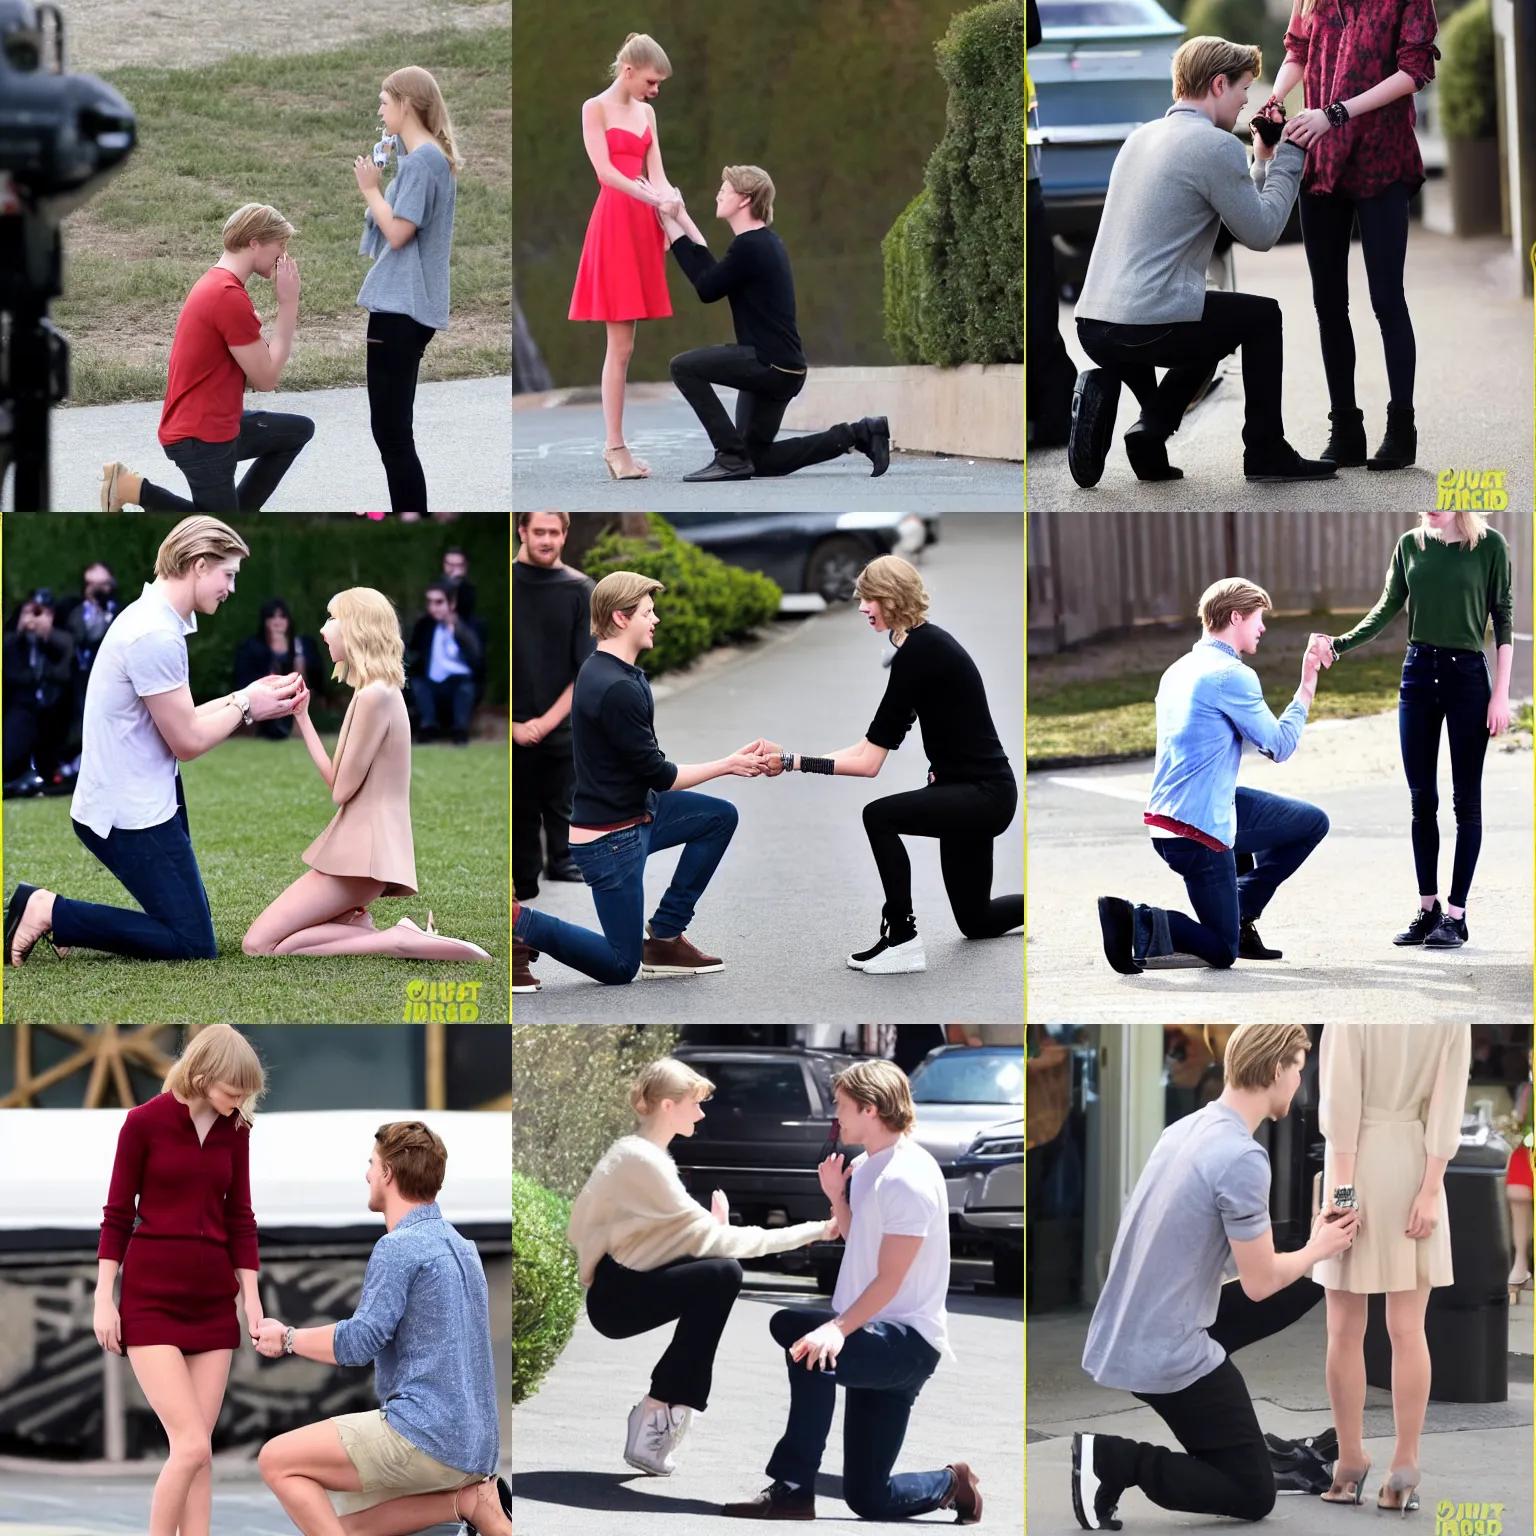 Prompt: paparazzi photo of Joe Alwyn on one knee proposing to Taylor Swift, 4K